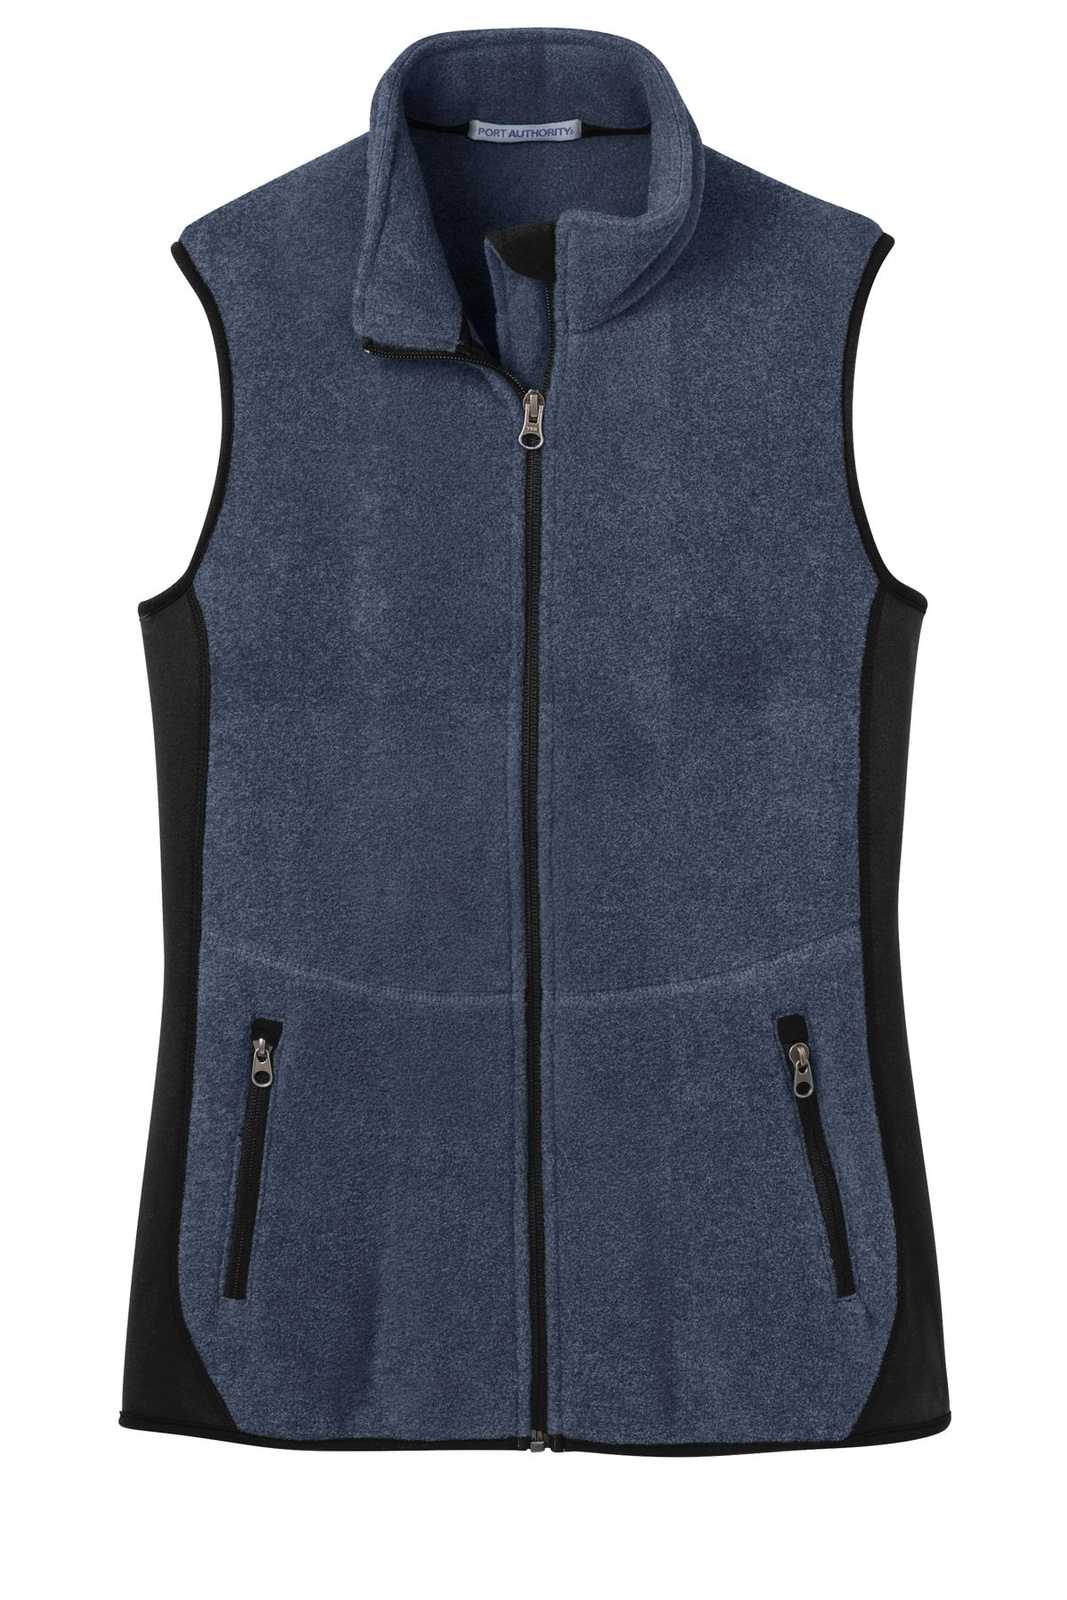 Port Authority L228 Ladies R-Tek Pro Fleece Full-Zip Vest - Navy Heather Black - HIT a Double - 5